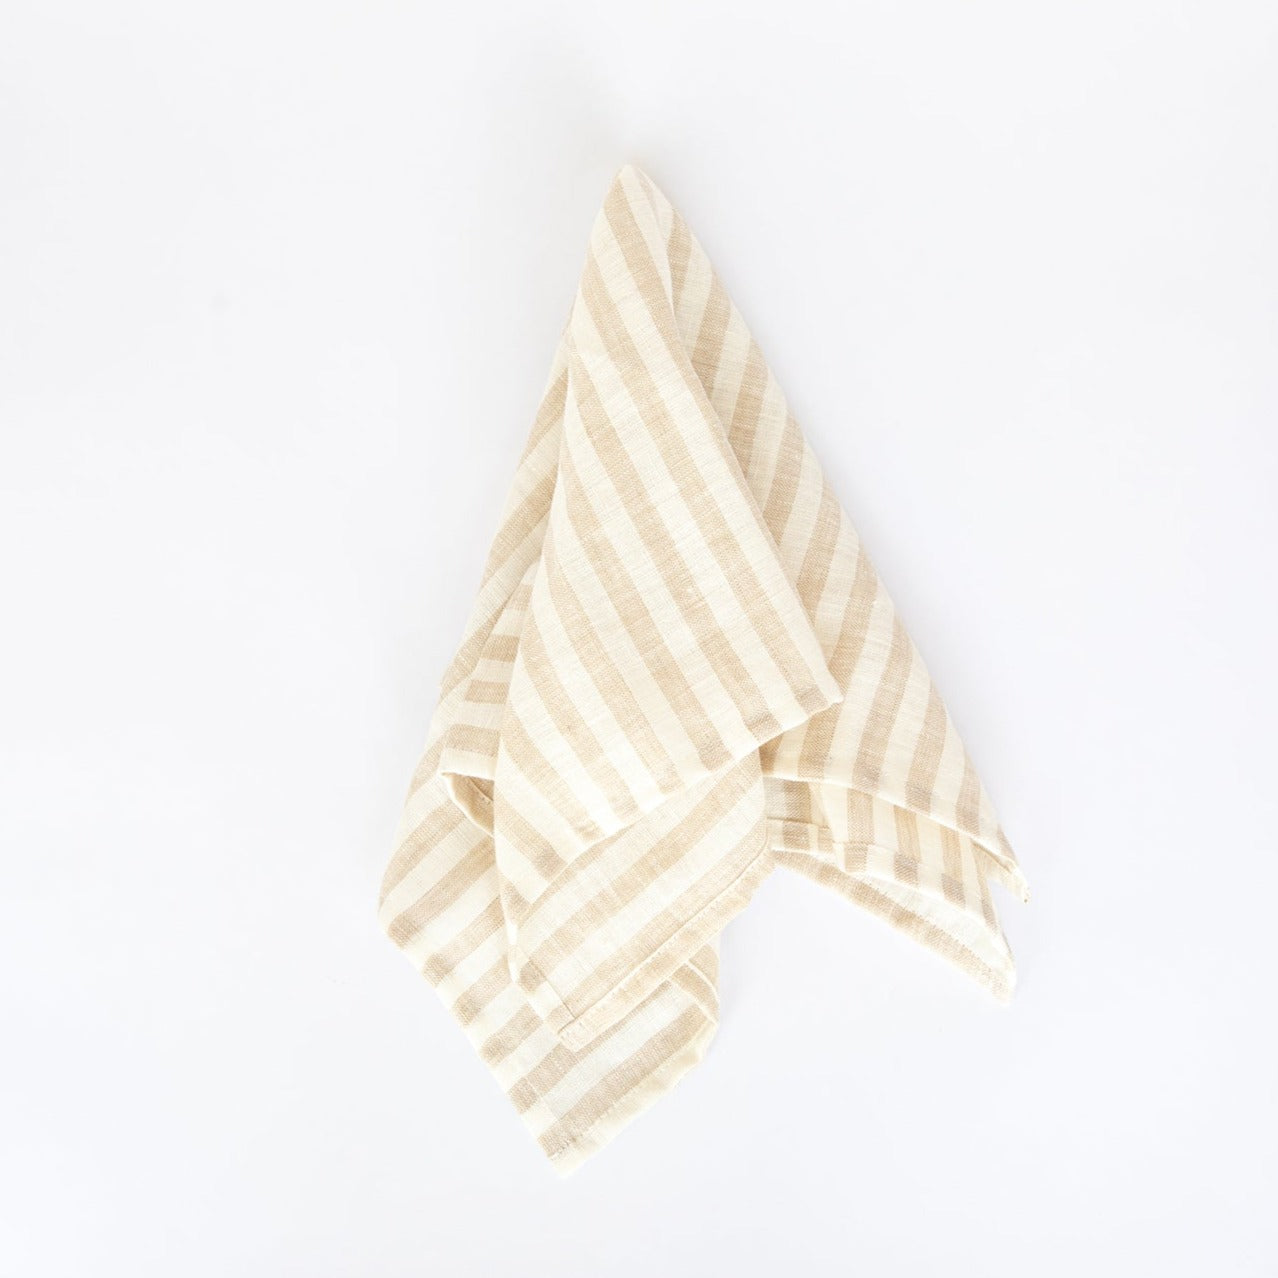 Linen Napkin - Natural Stripe (set of 2)